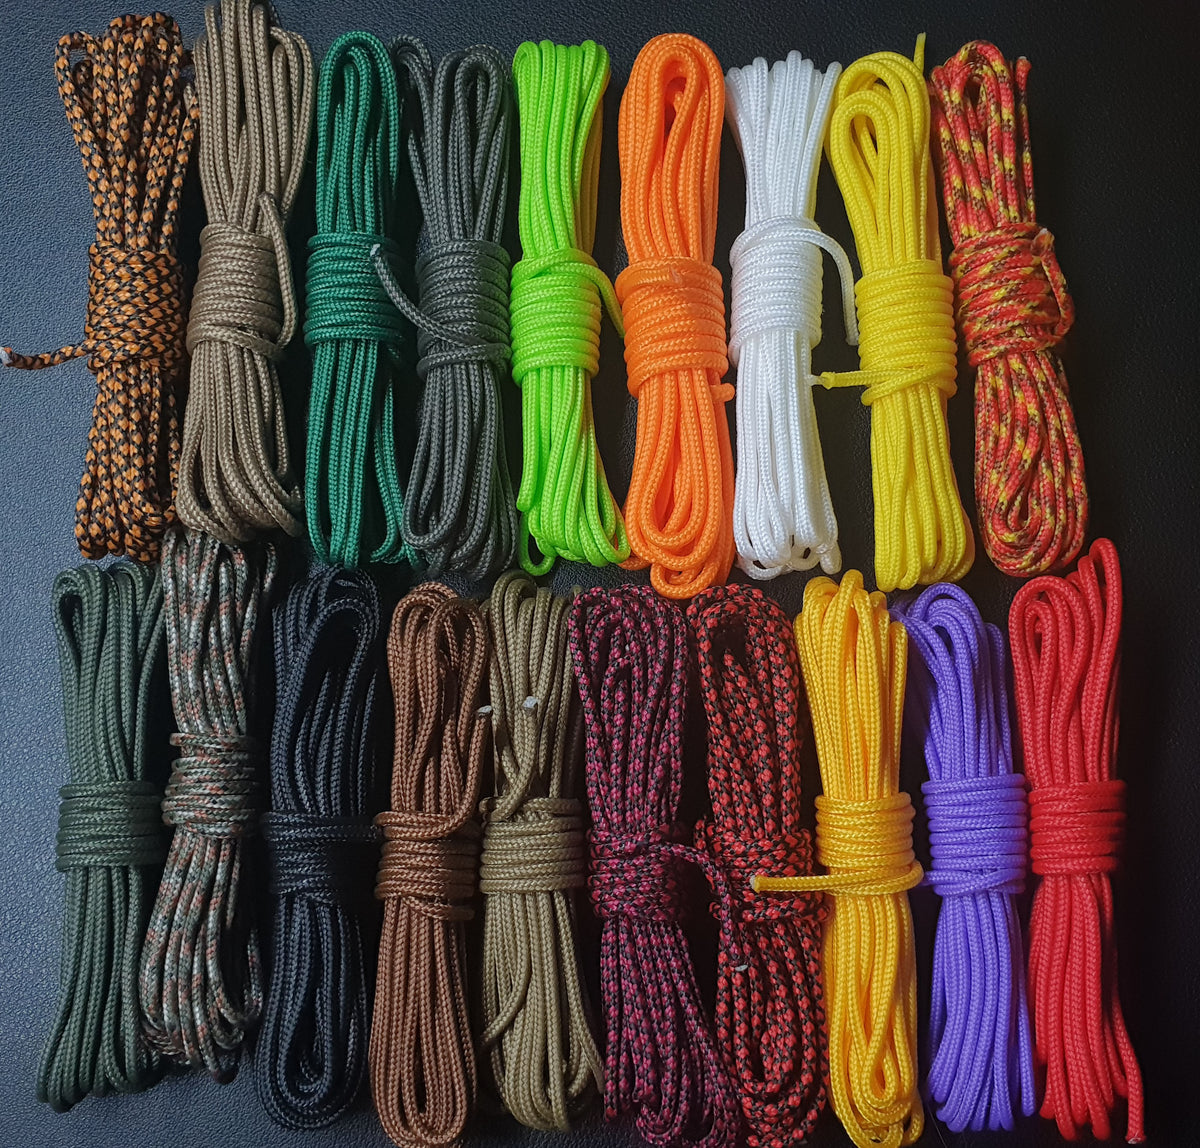 10mm Rope – ParacordPH